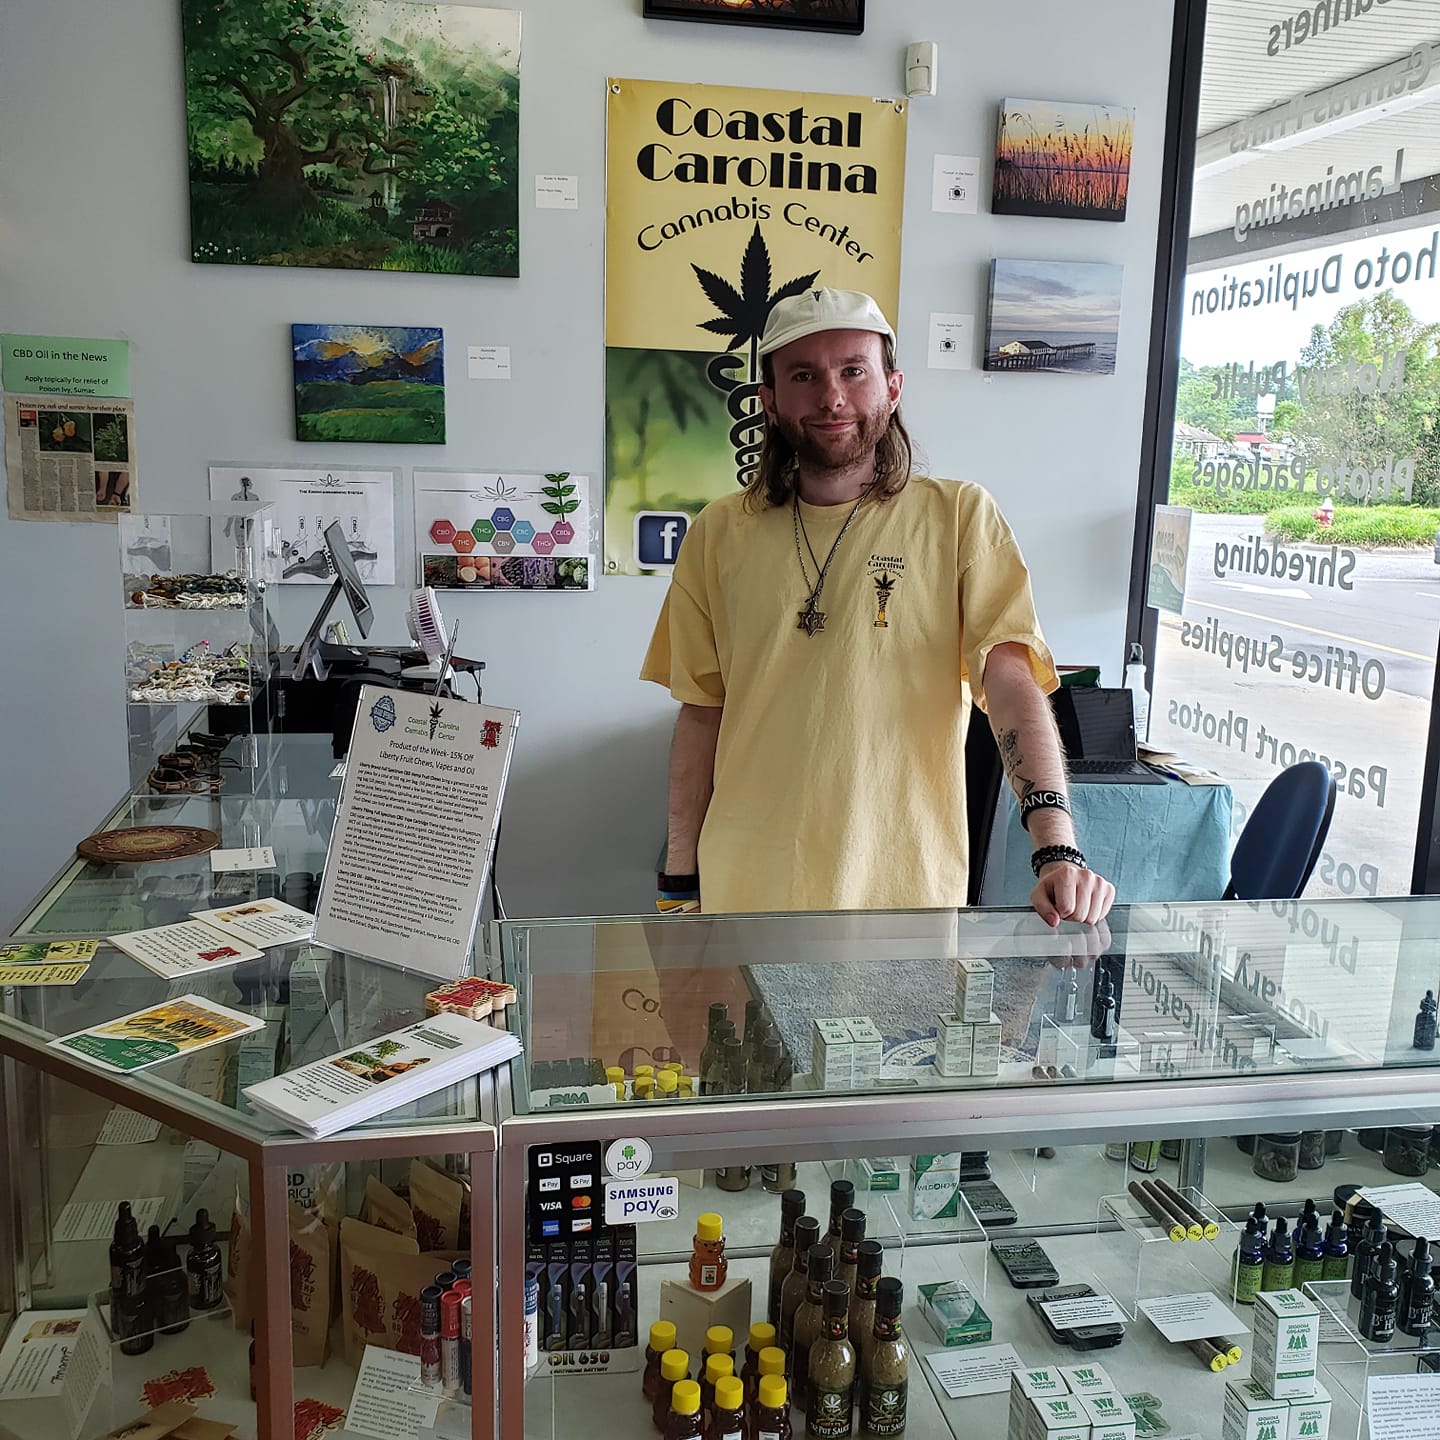 Coastal Carolina Cannabis Center